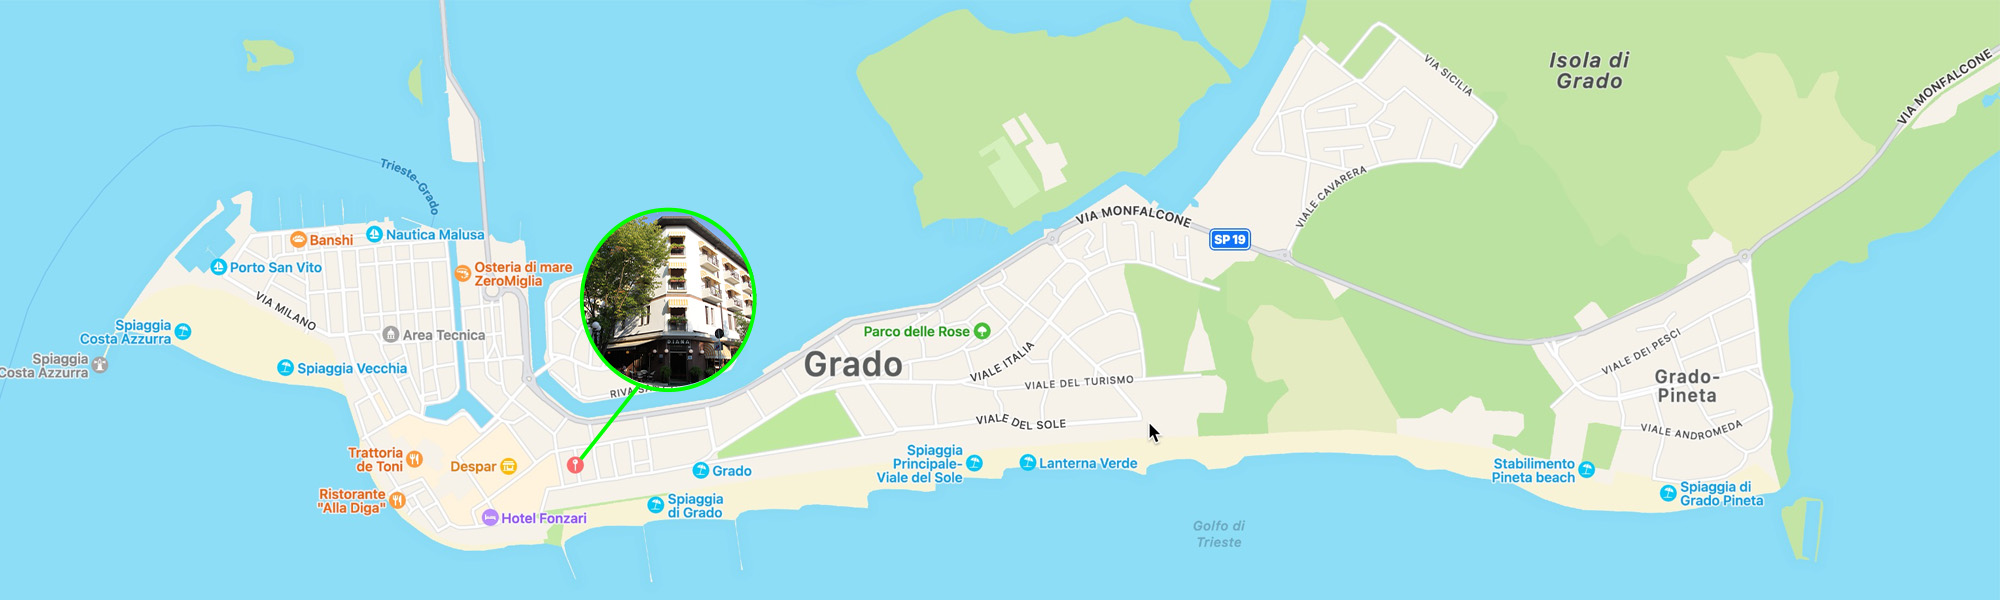 Karte von Grado